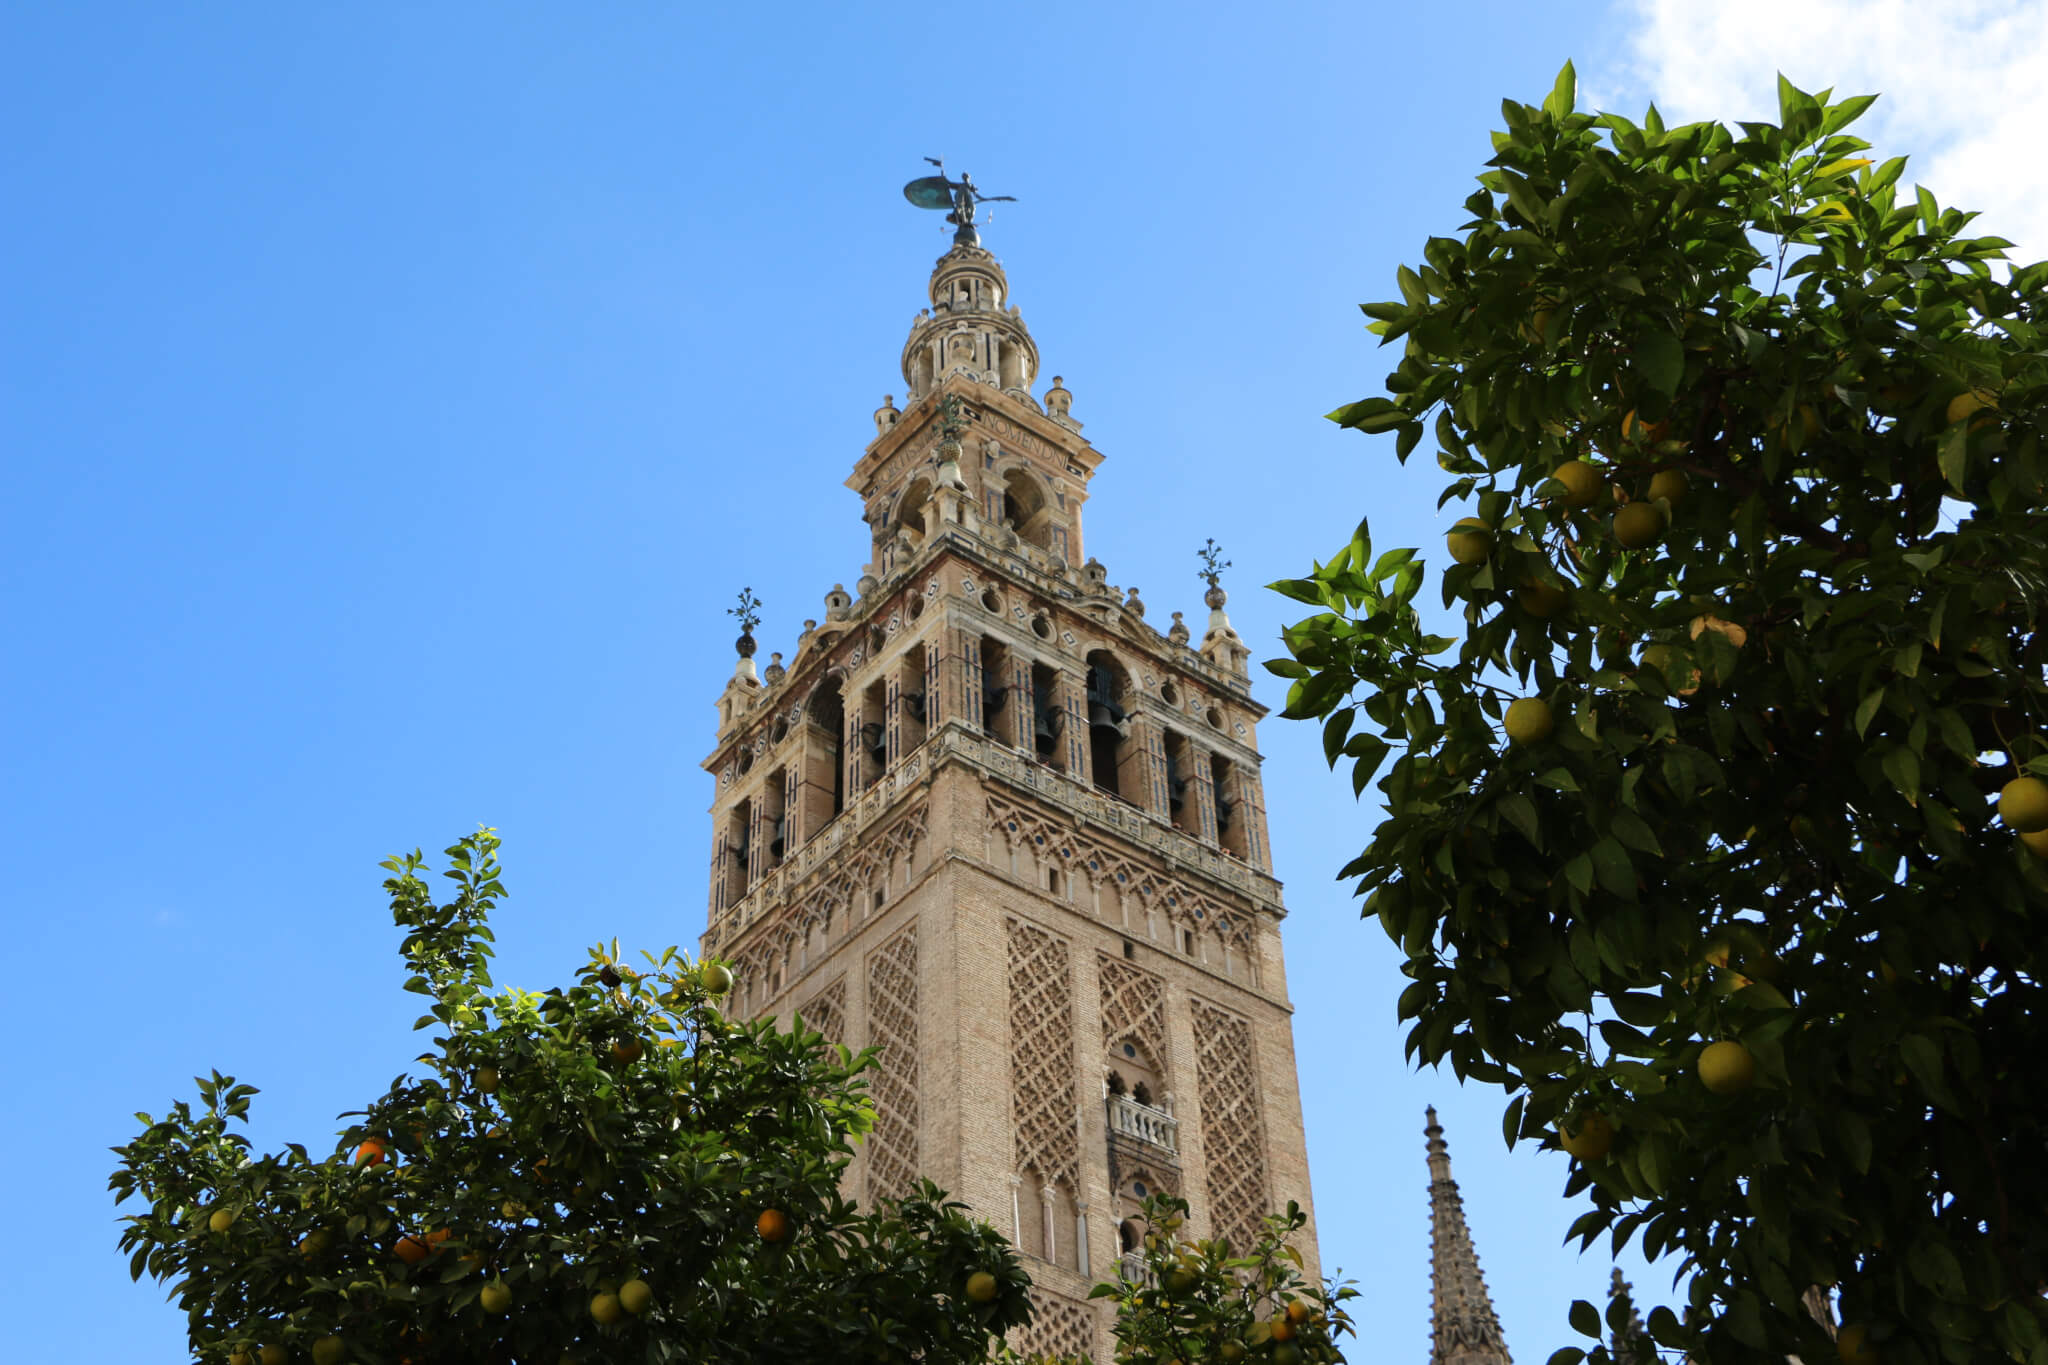 La Giralda, Sevilla